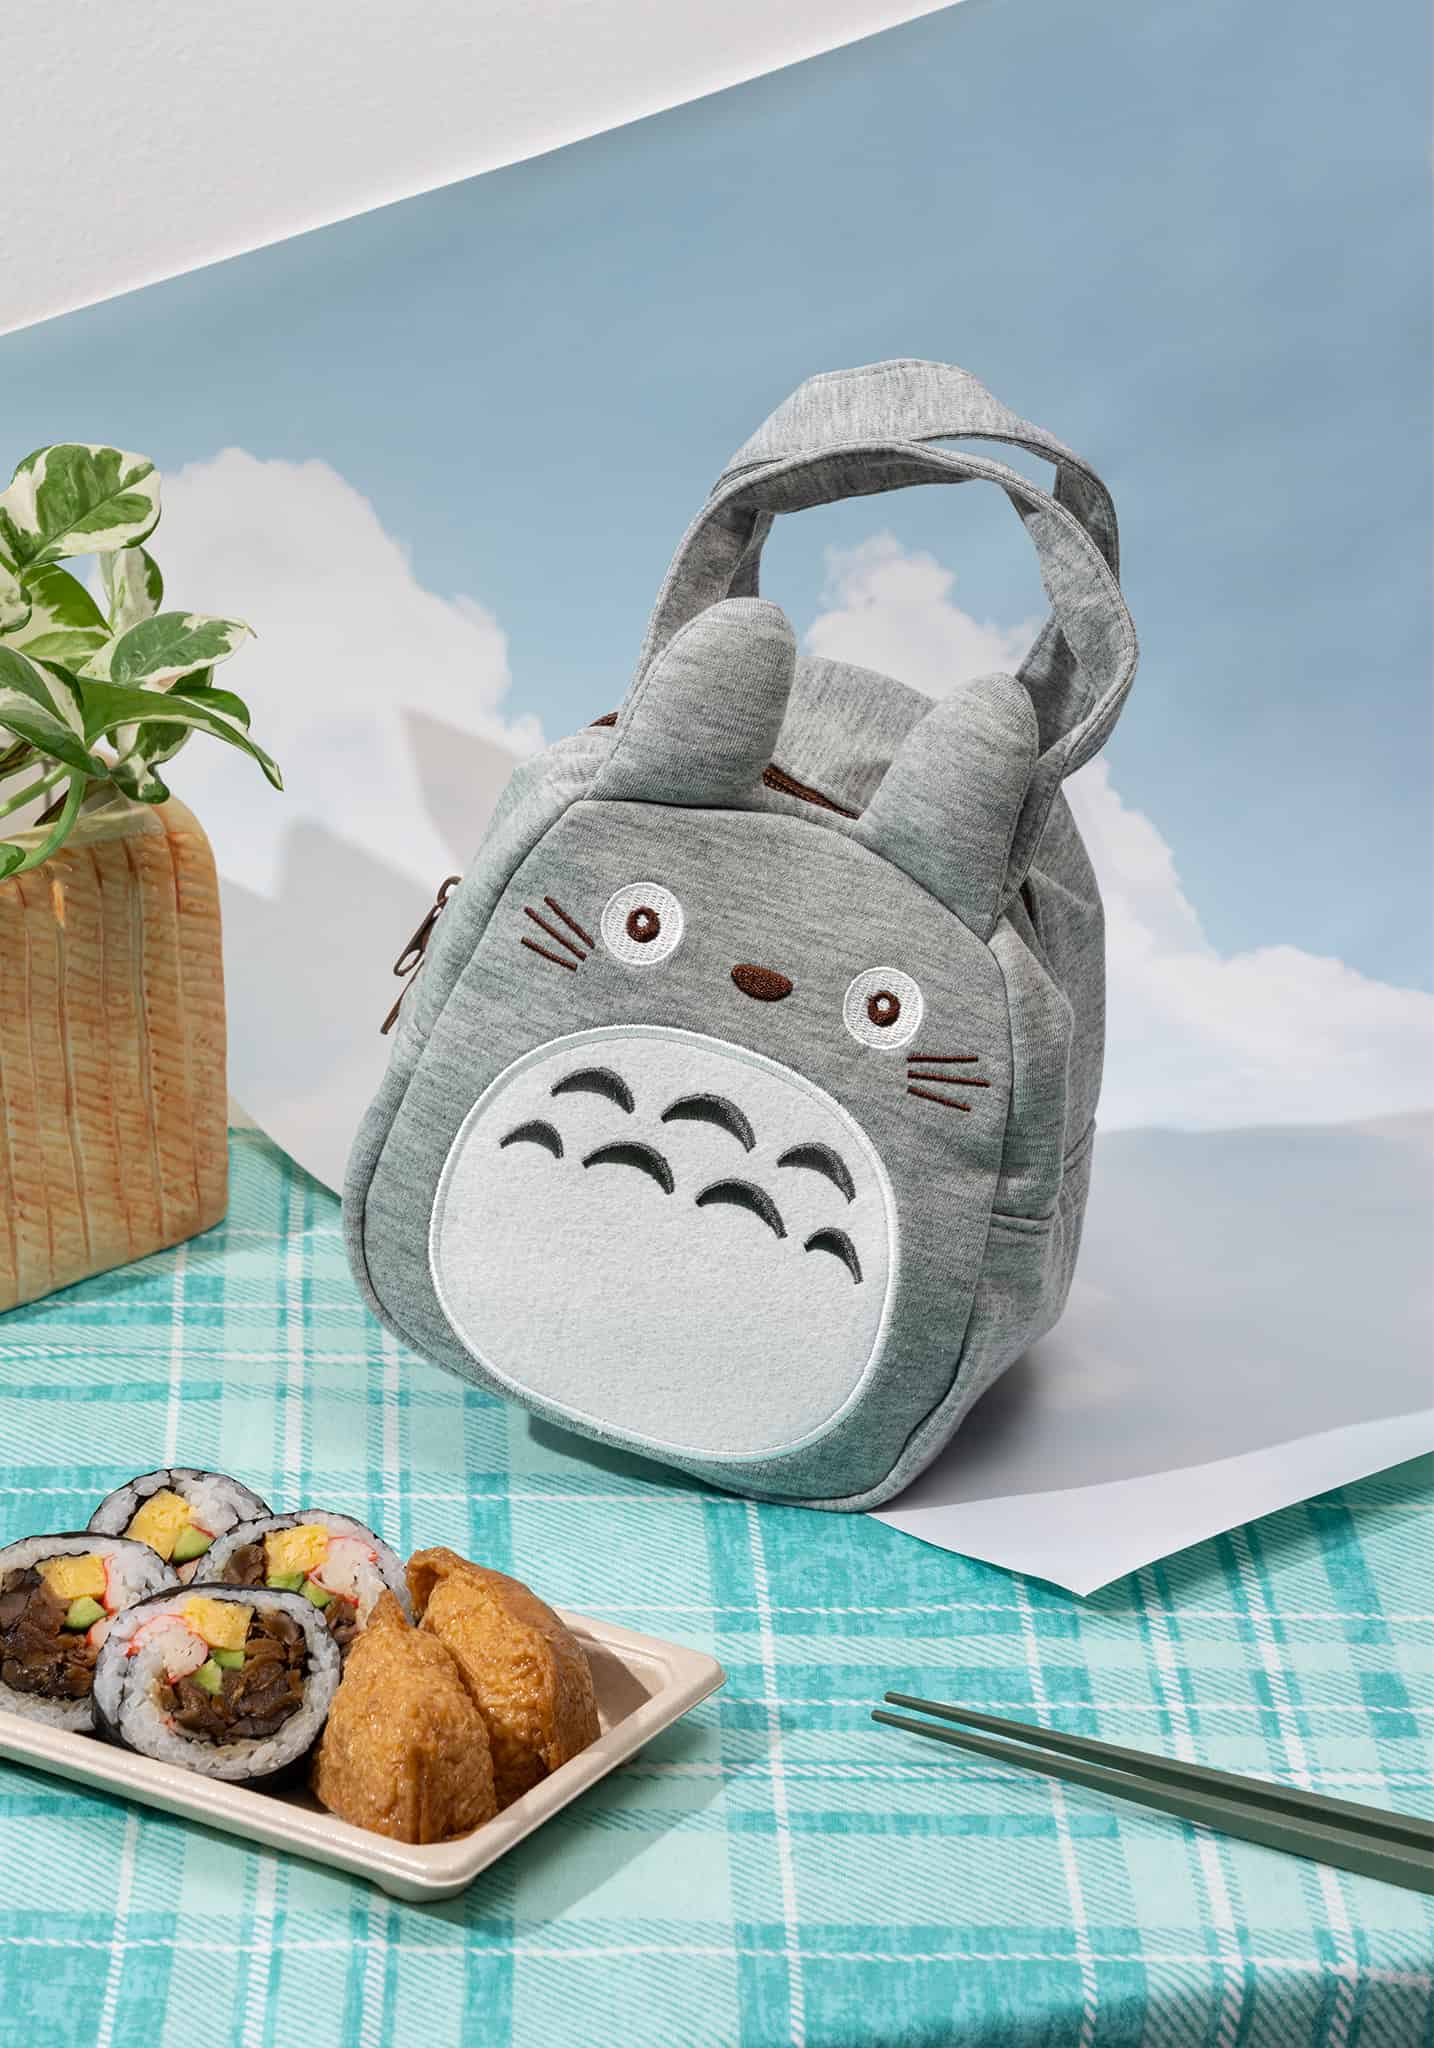 My Neighbor Totoro White Totoro Die Cut Lunch Bag